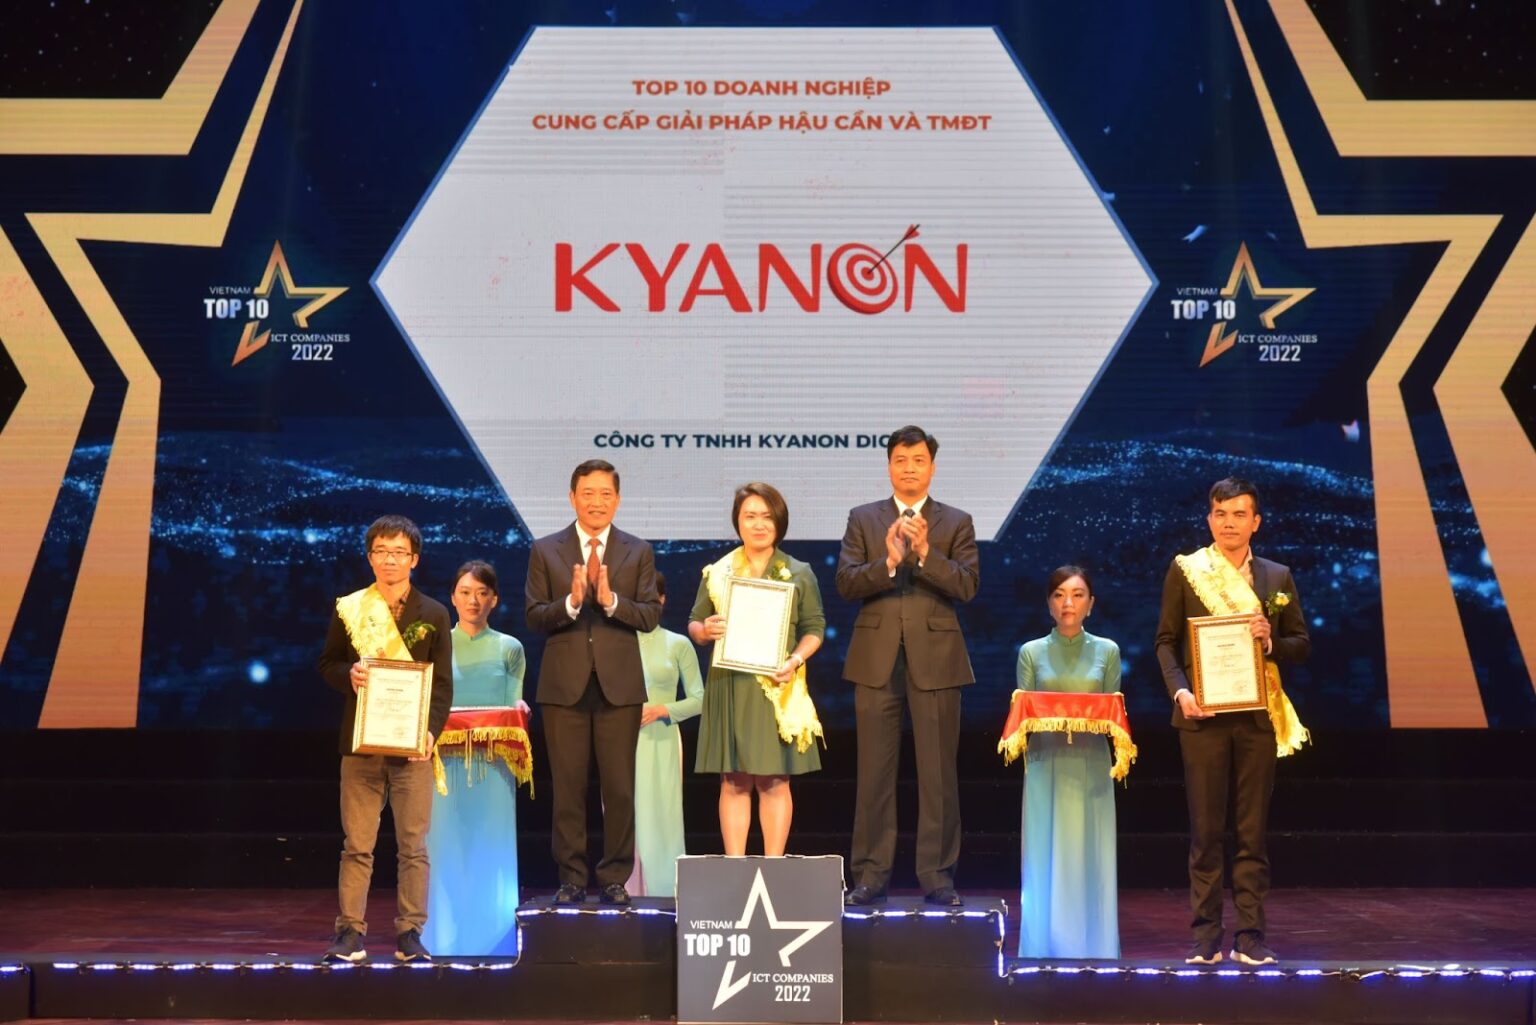 Kyanon Digital won Top 10 ICT Companies Vietnam 2022